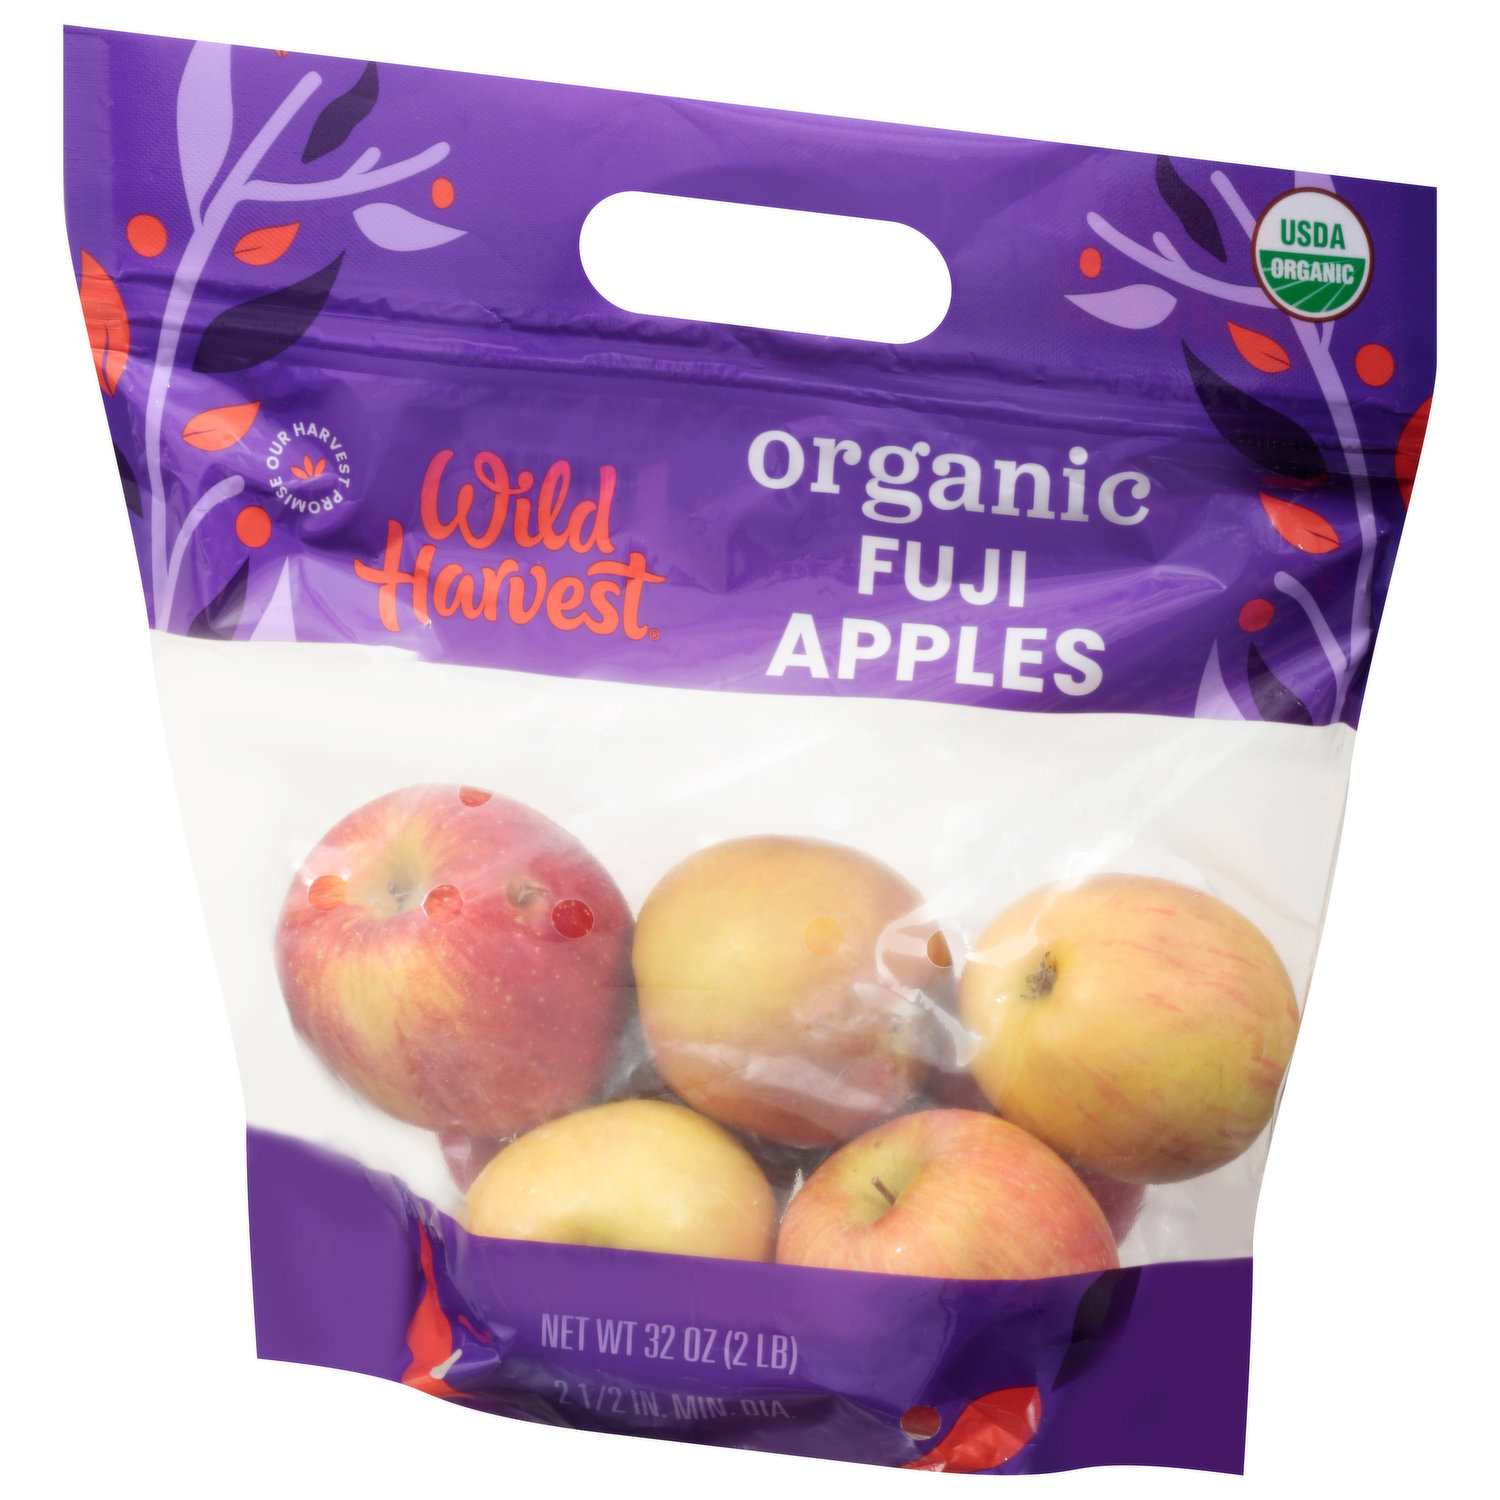 Organic Apples Fuji